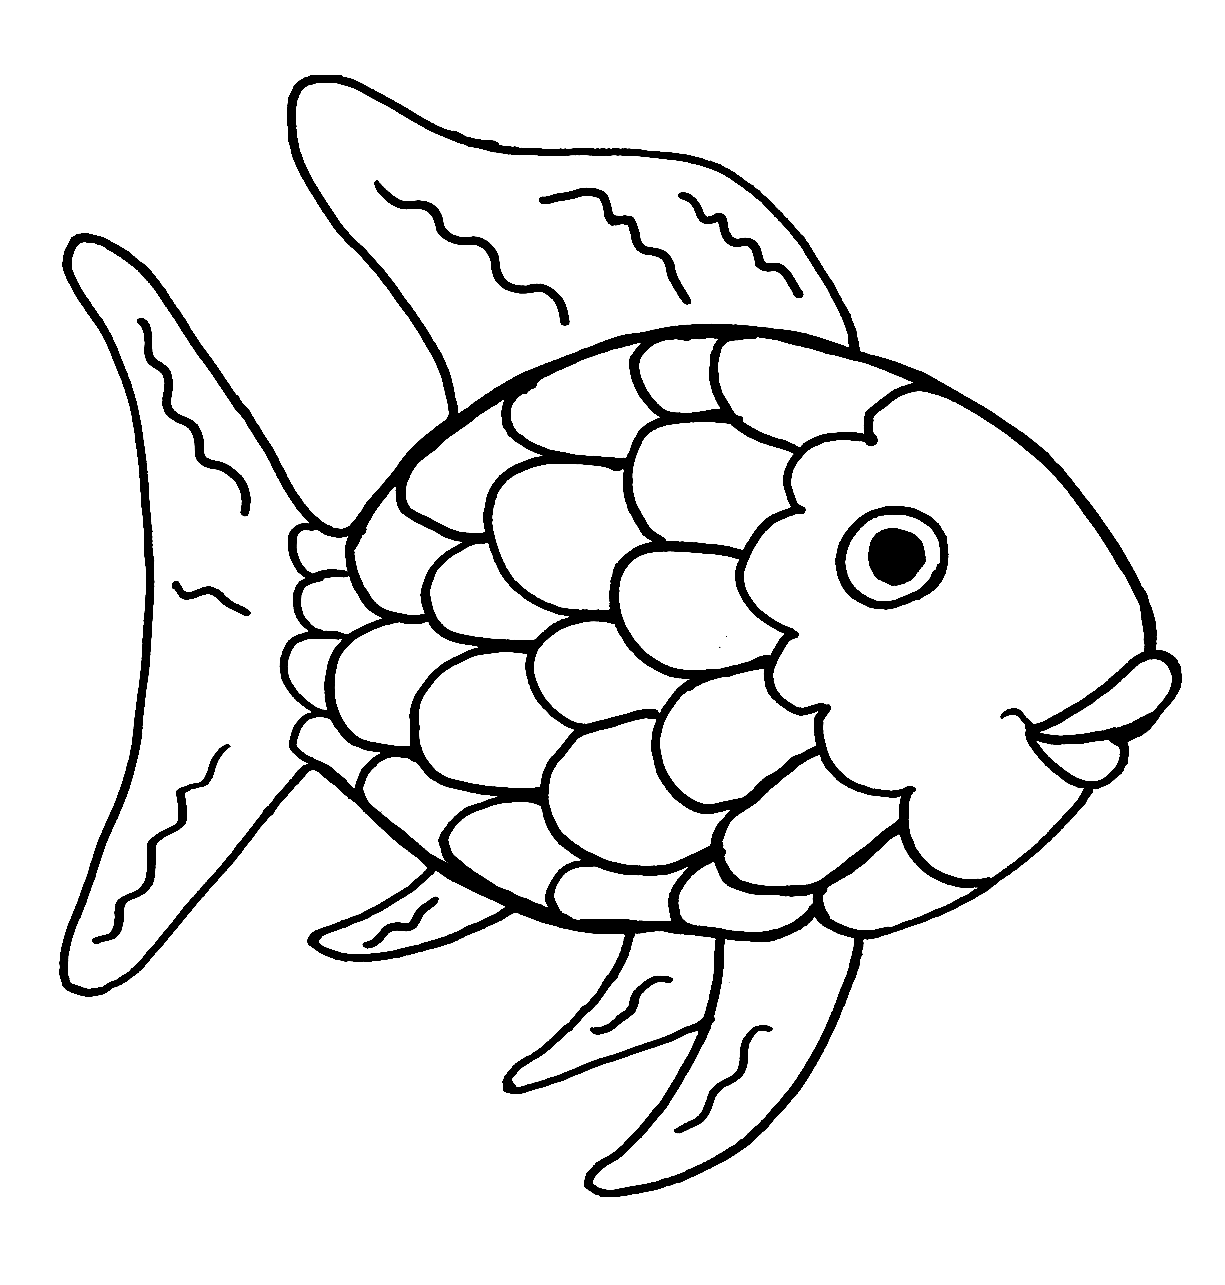 Poisson arc-en-ciel de Rainbow Fish